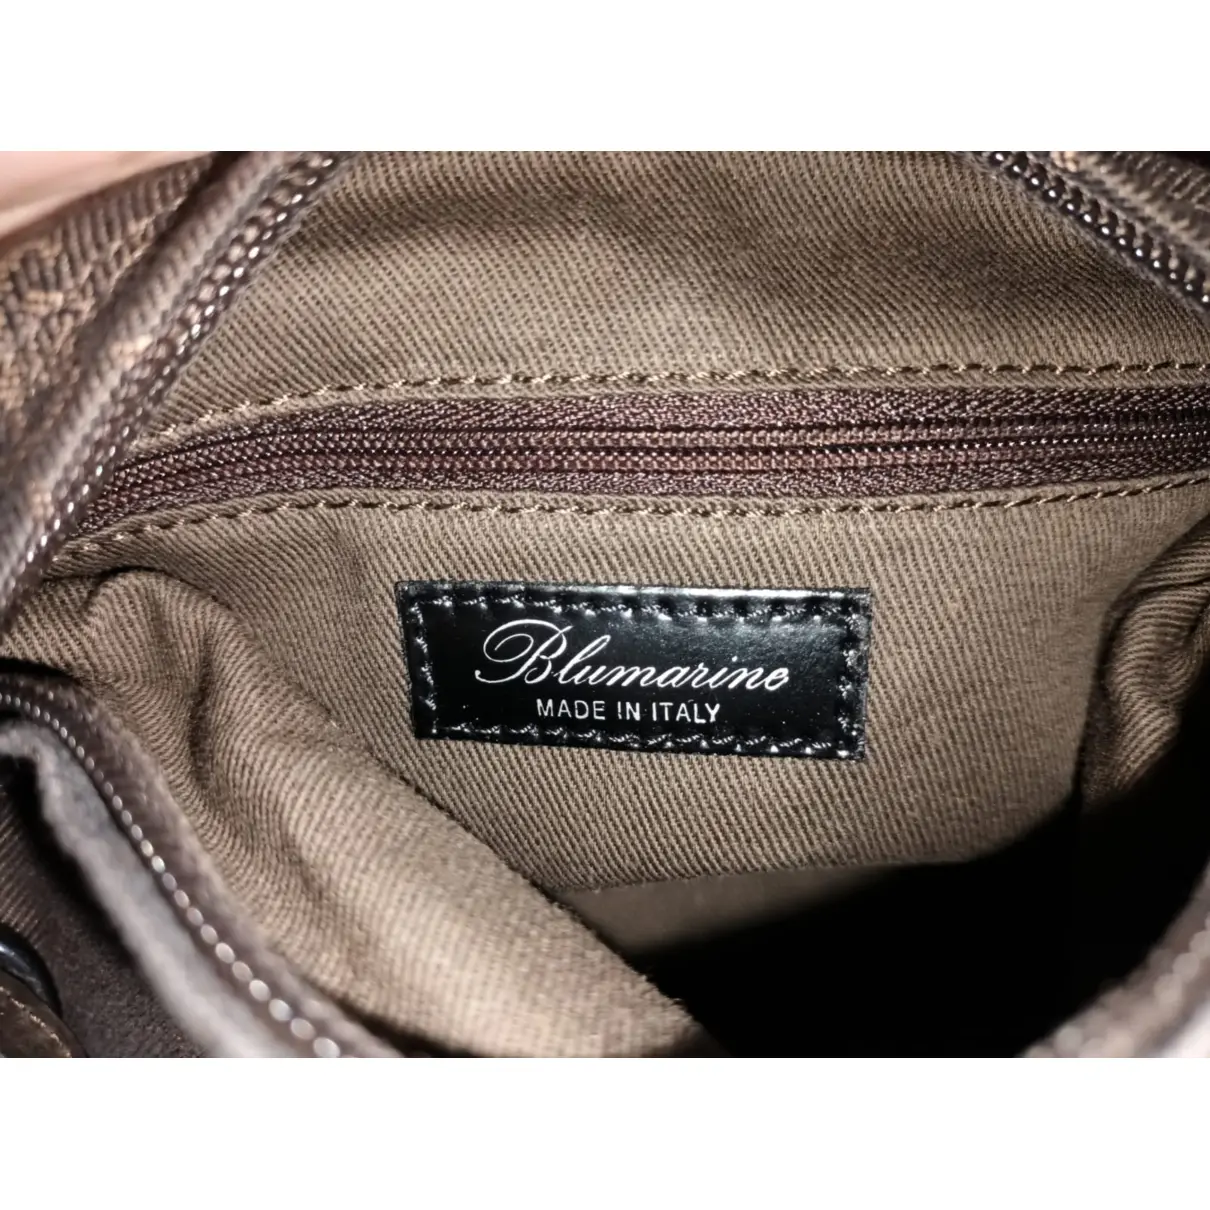 Buy Blumarine Leather handbag online - Vintage